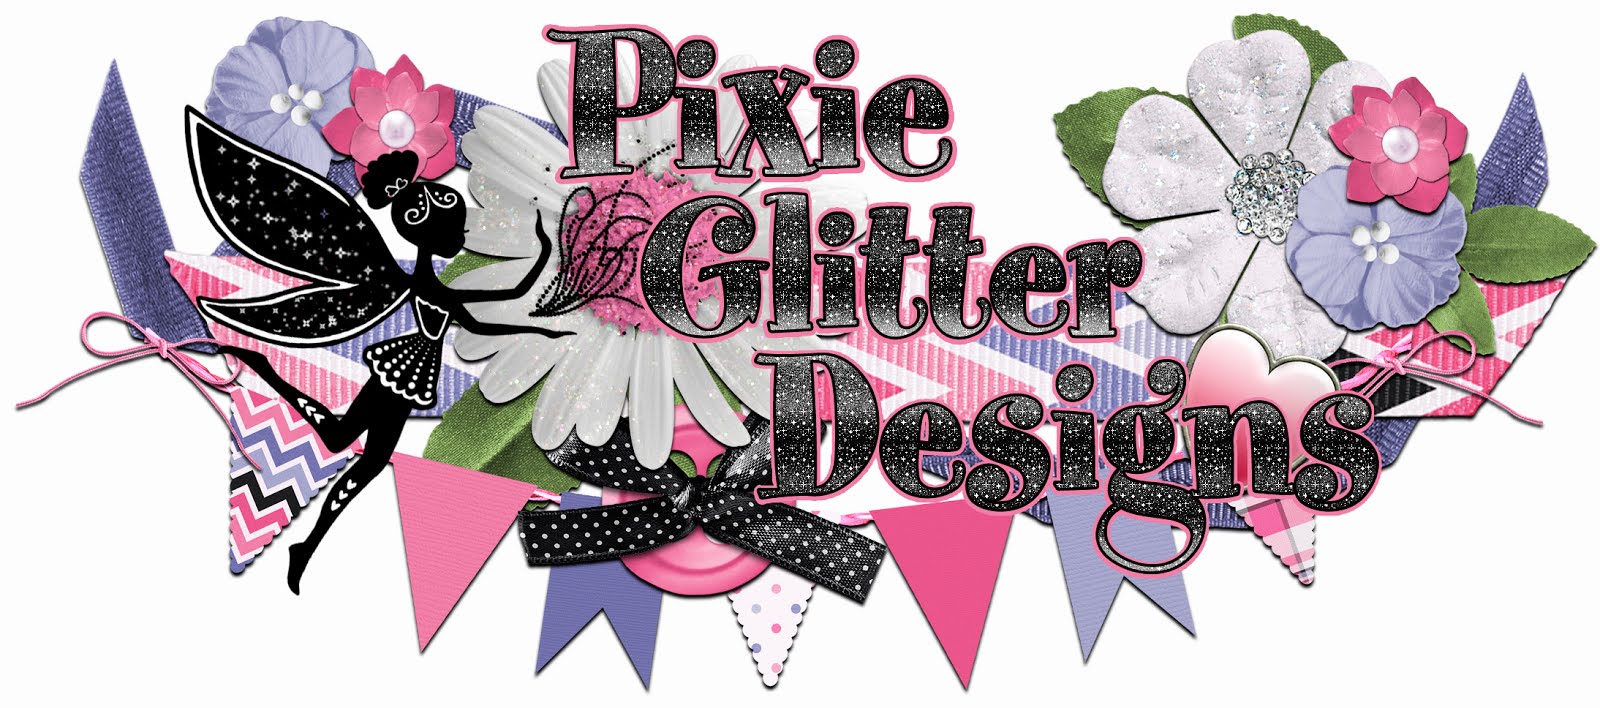 Pixie Glitter Designs